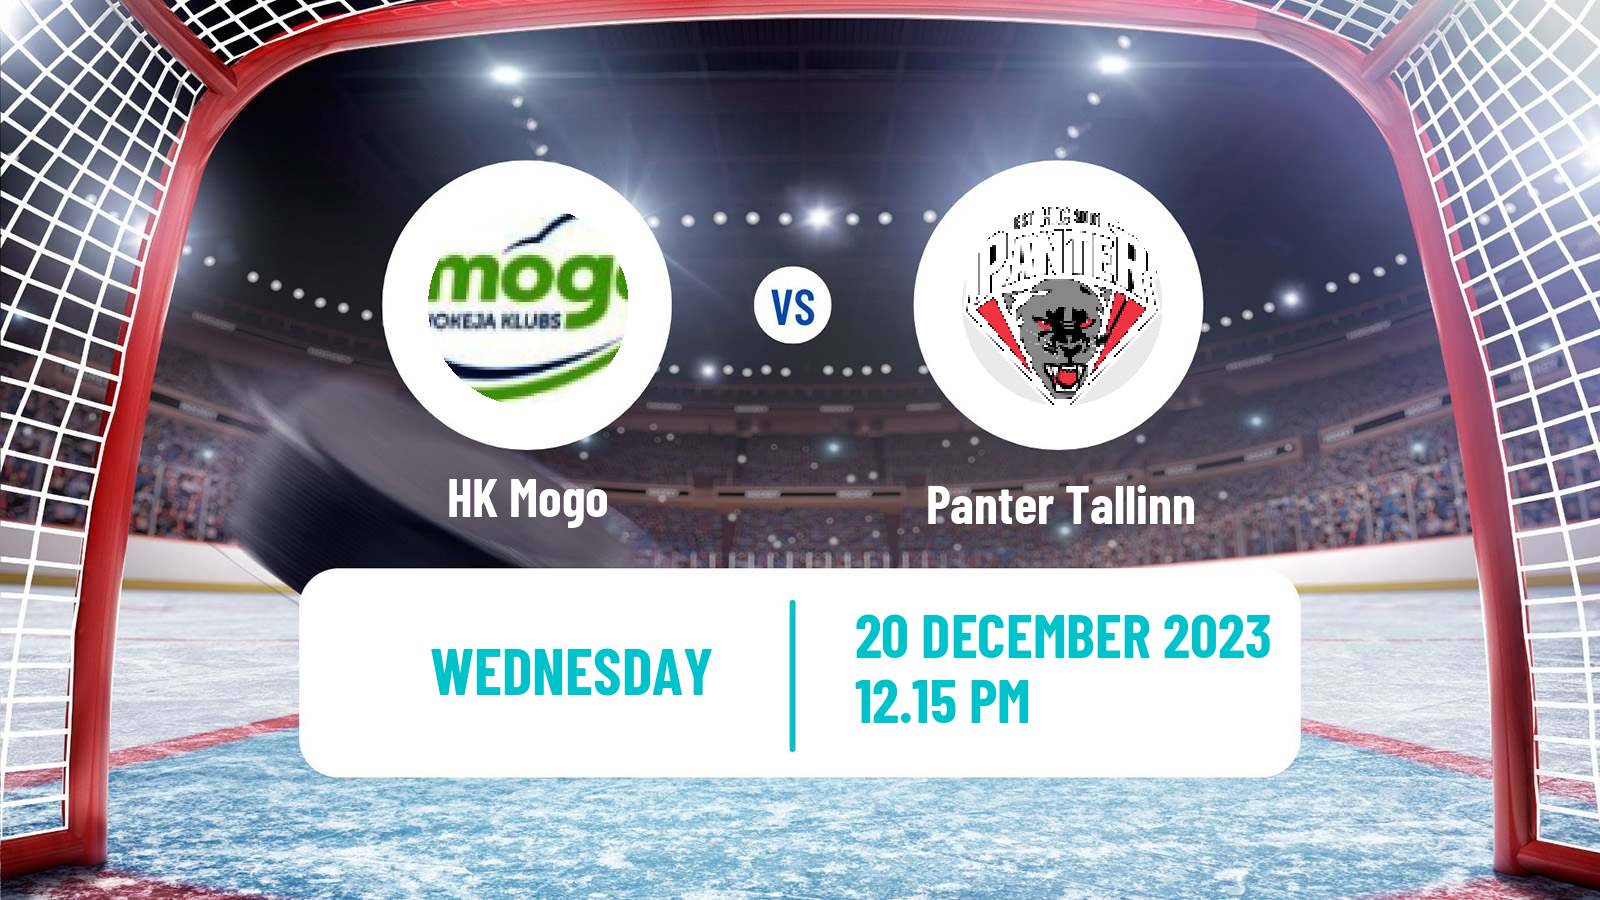 Hockey Latvian Hokeja Liga Mogo - Panter Tallinn